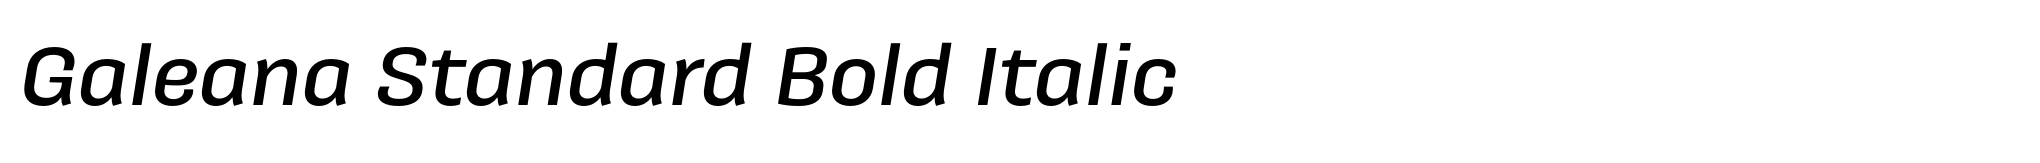 Galeana Standard Bold Italic image